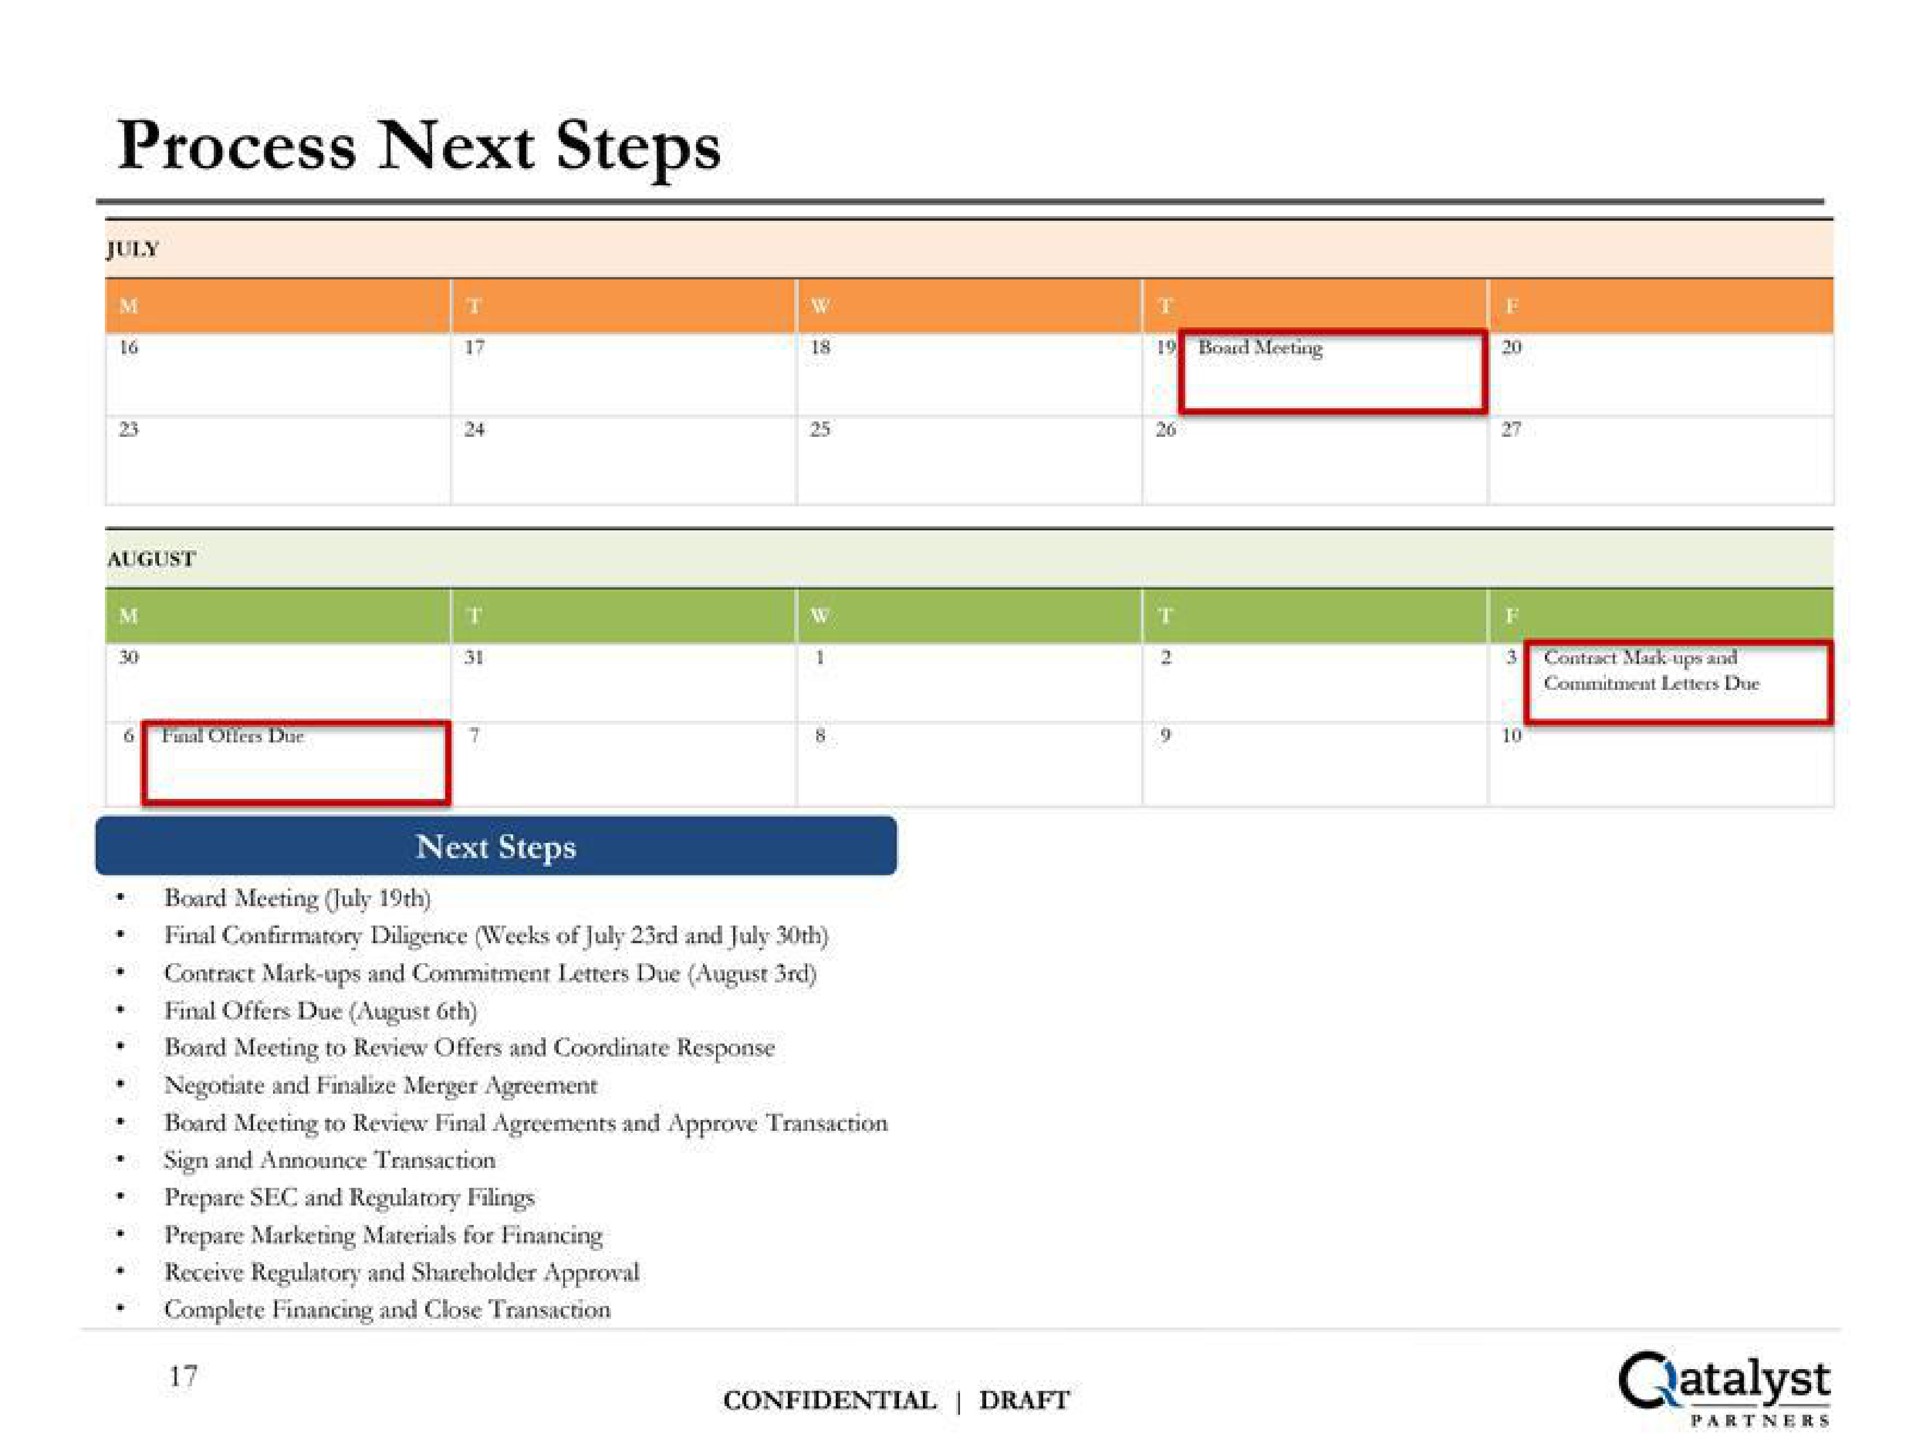 process next steps catalyst | Qatalyst Partners